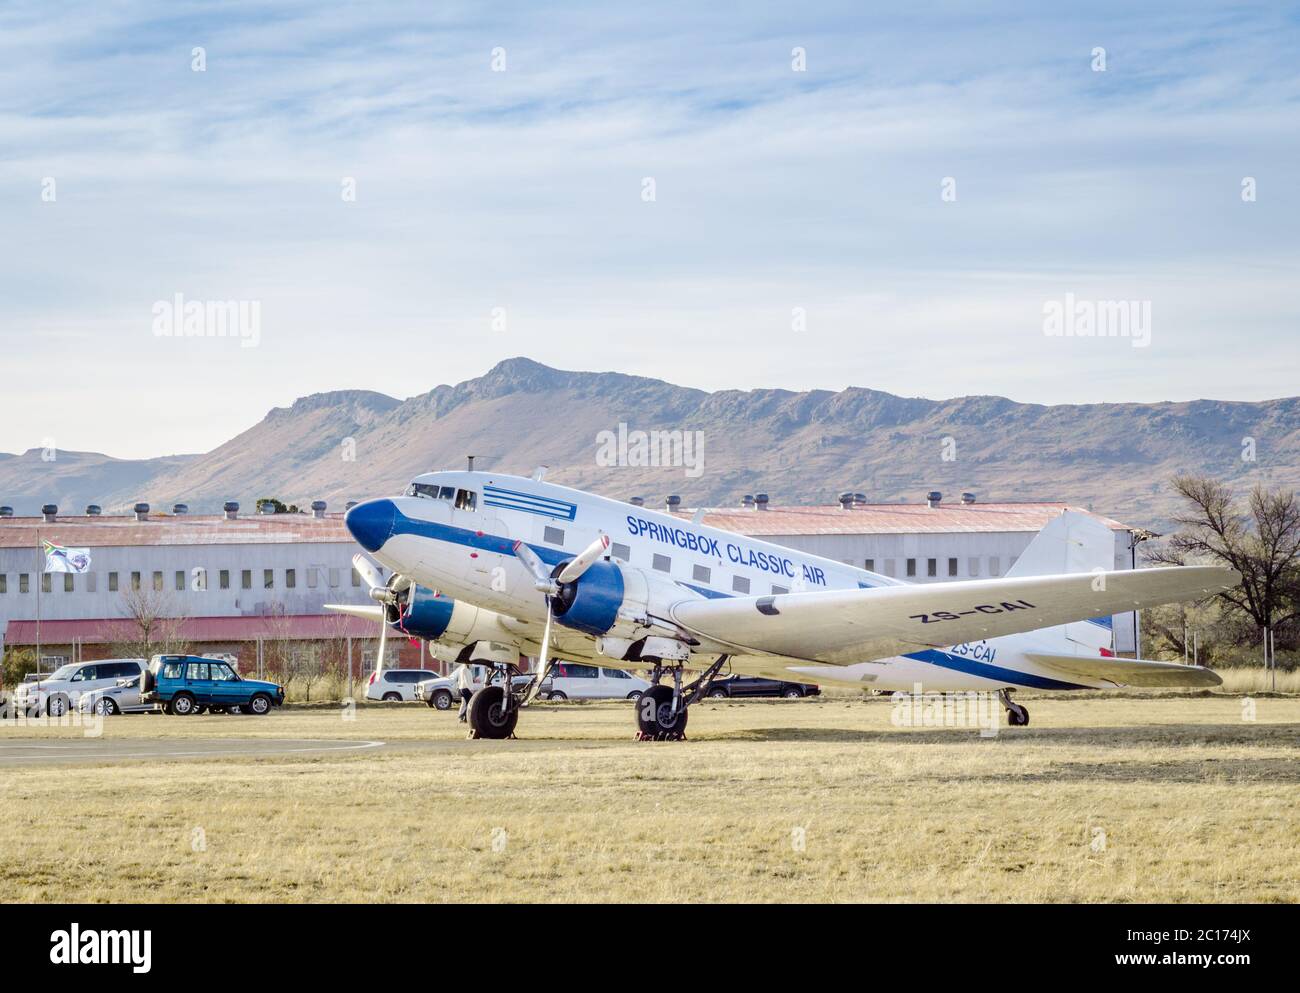 QUEENSTOWN, SOUTH AFRICA - 17 June 2017: Vintage Douglas DC 3 Dakota aeroplane parked at air show ex Stock Photo